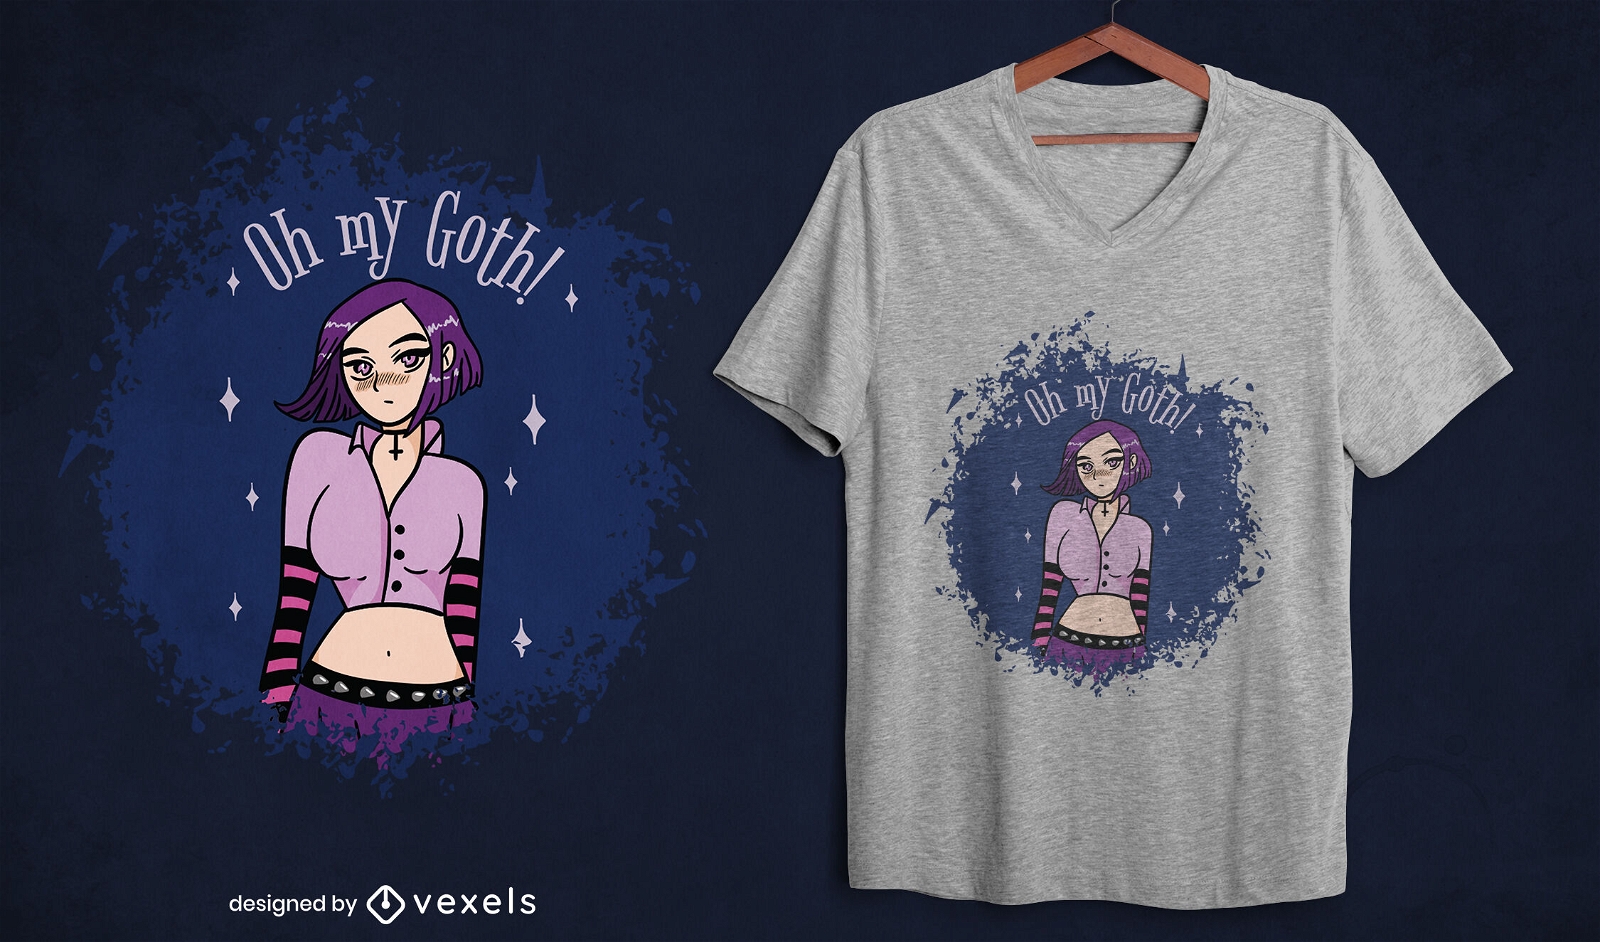 Diseño de camiseta de chica gótica de pelo corto.